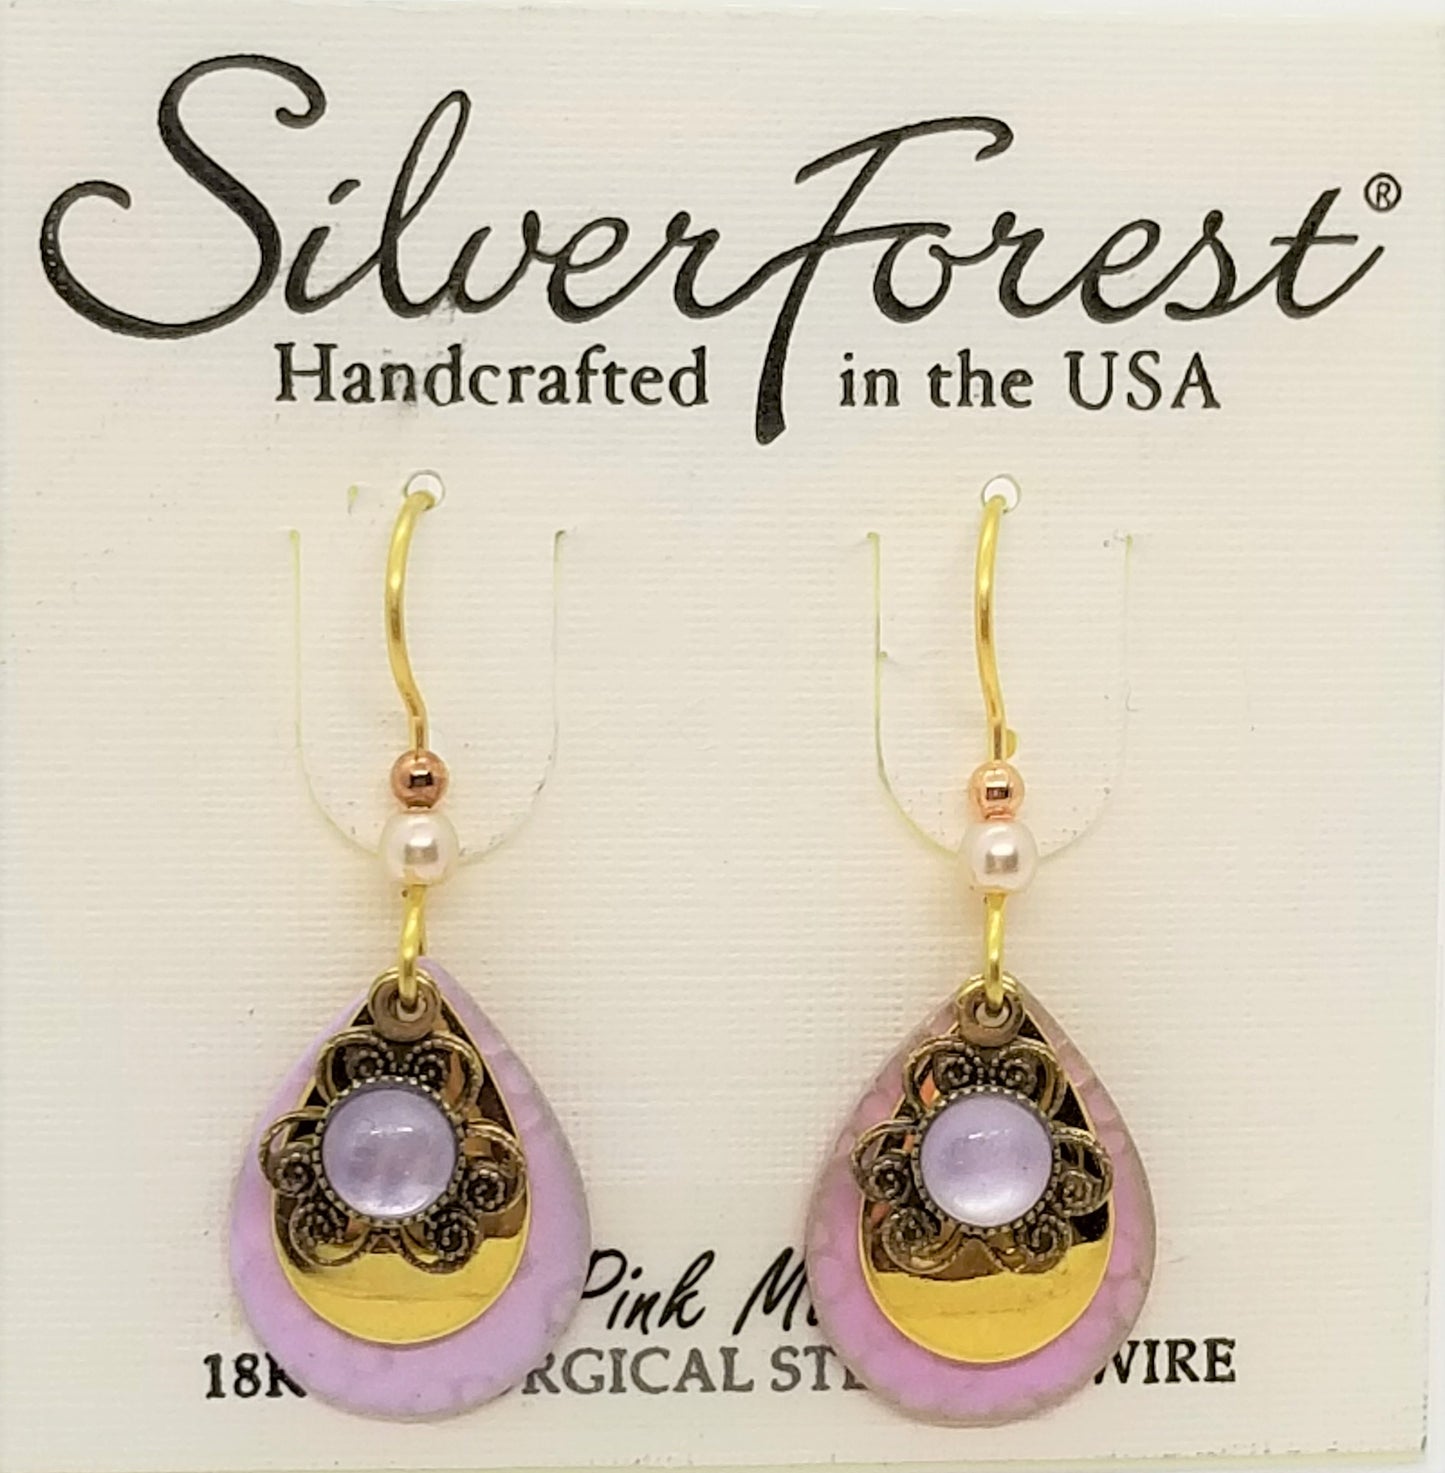 Silver forest 18kt on surgical steel ear wire pink mussel earrings